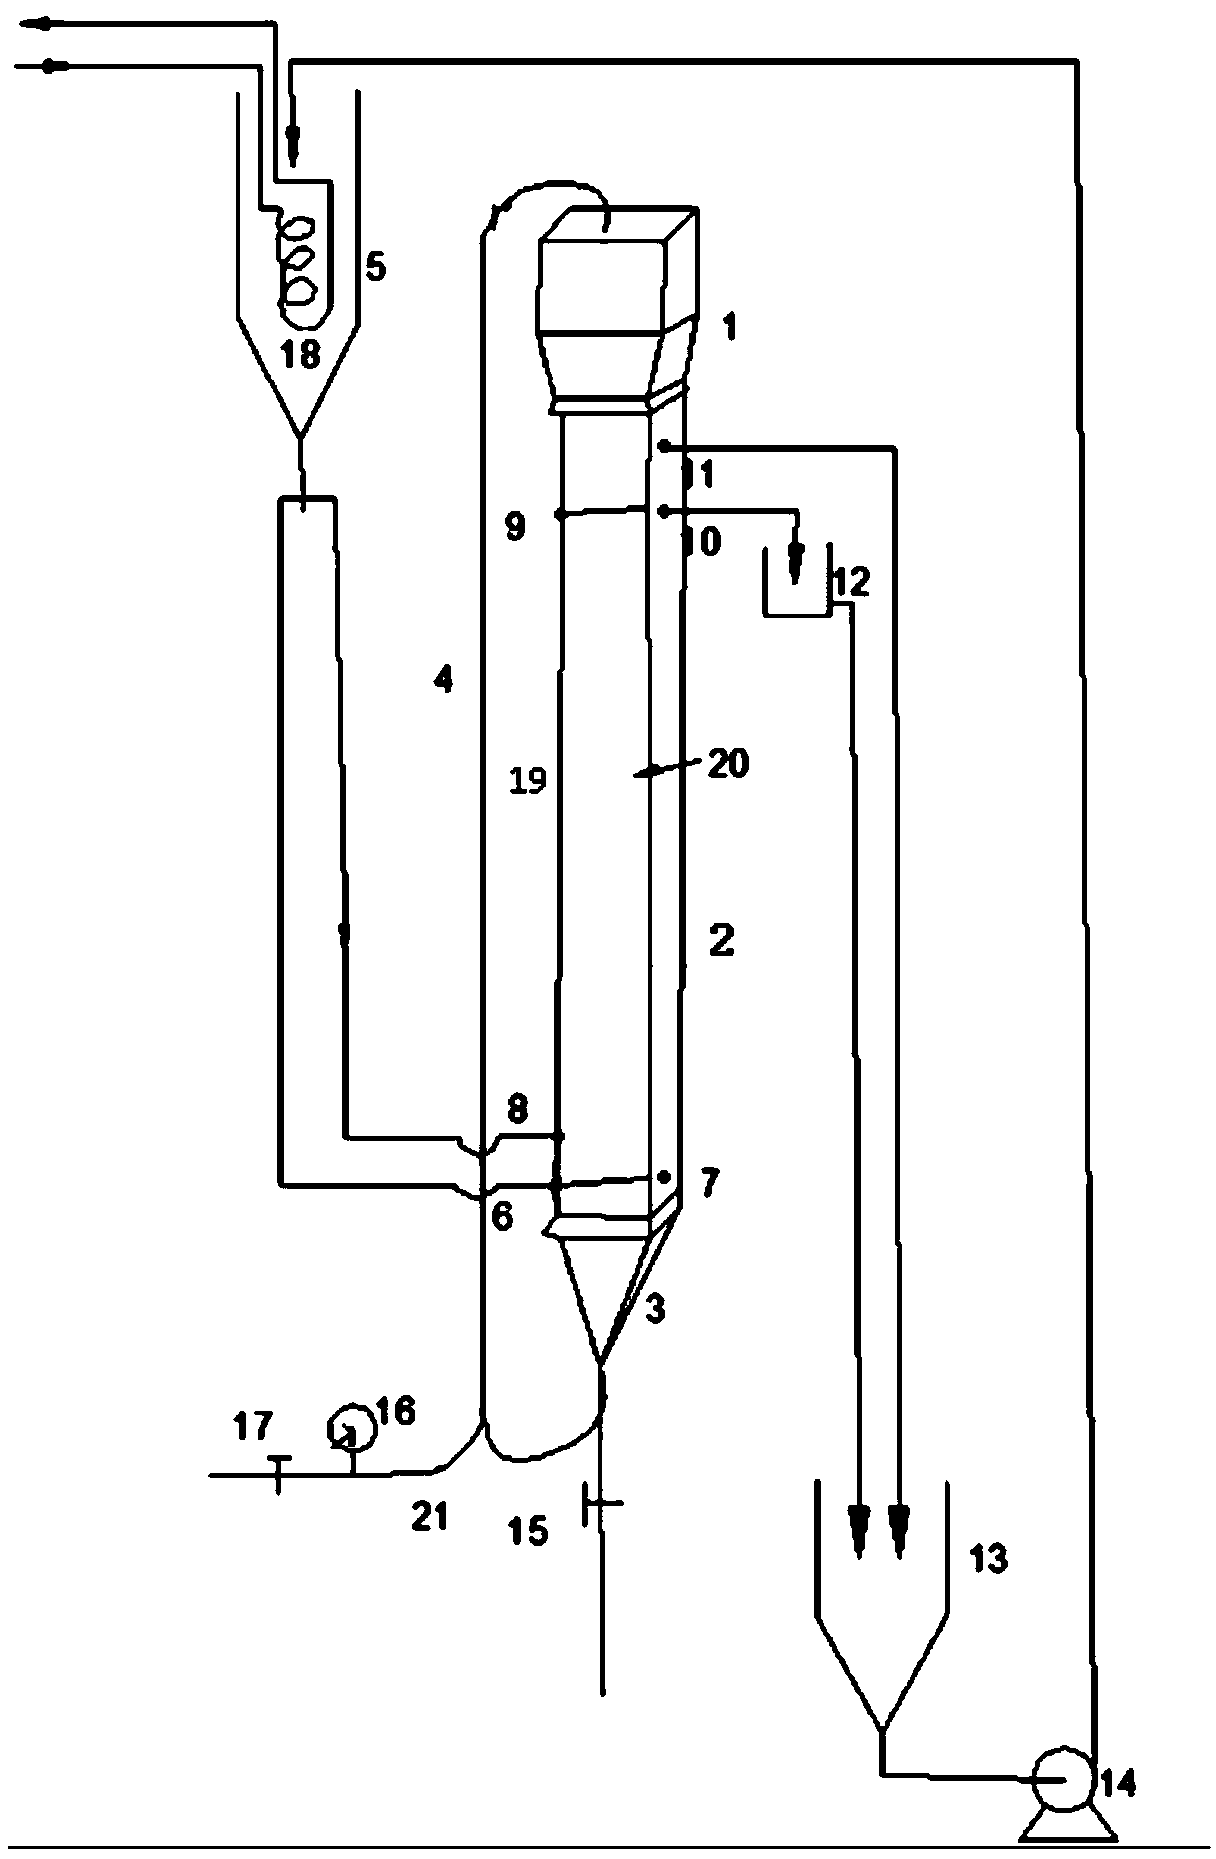 Method for separating uranium from uranium ore pulp with electrodialysis method